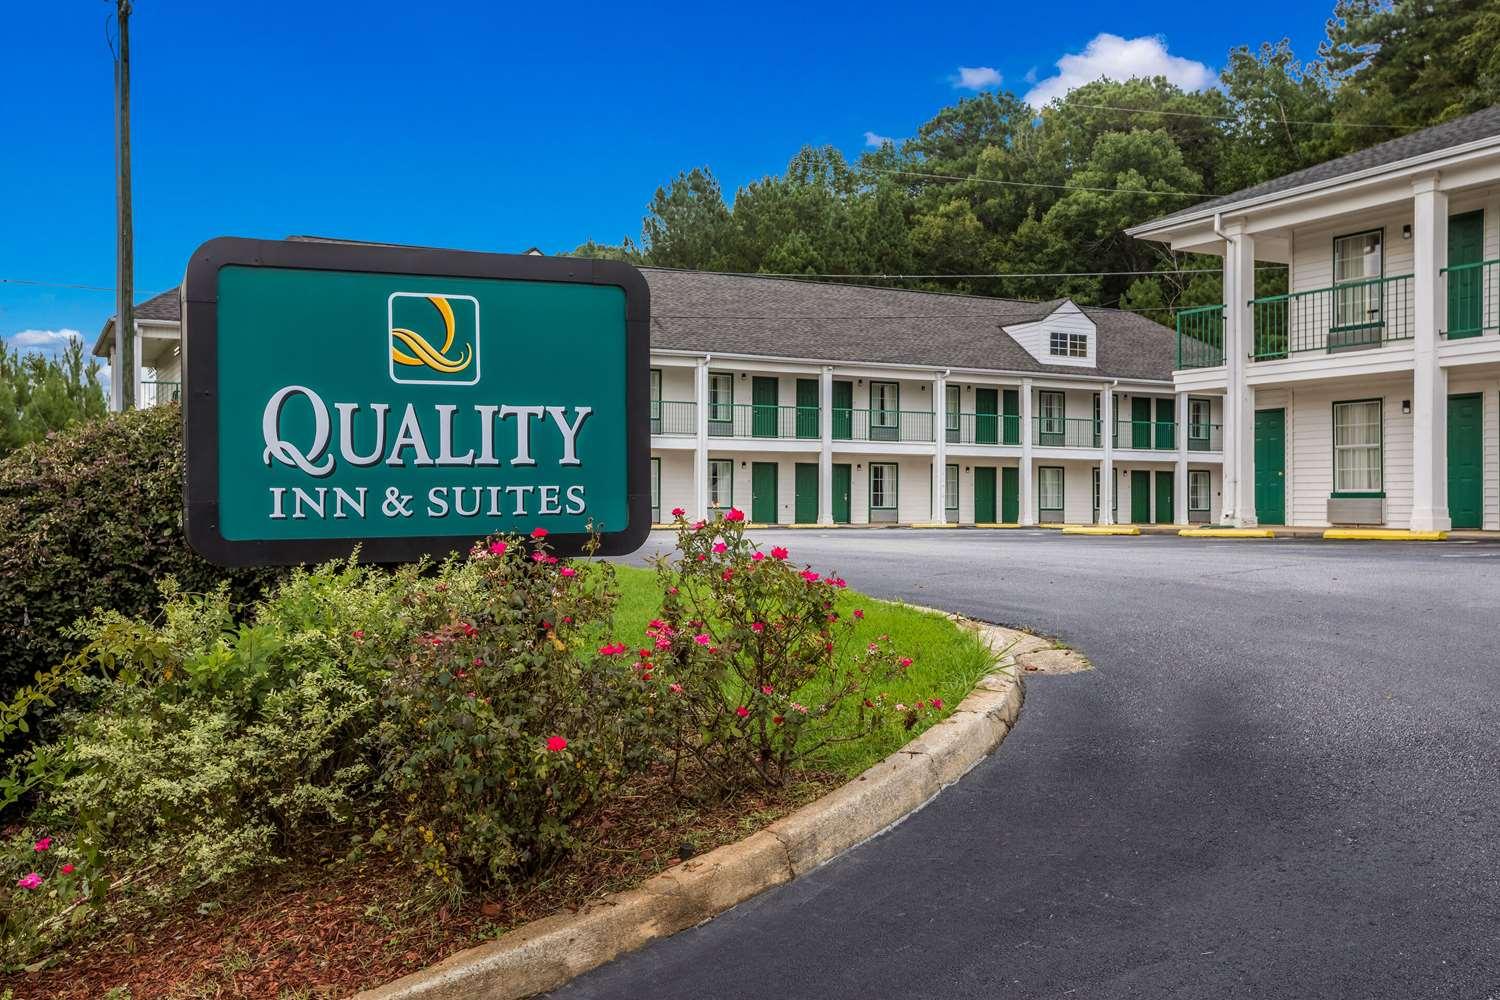 Quality Inn and Suites near Lake Oconee in Greensboro, GA